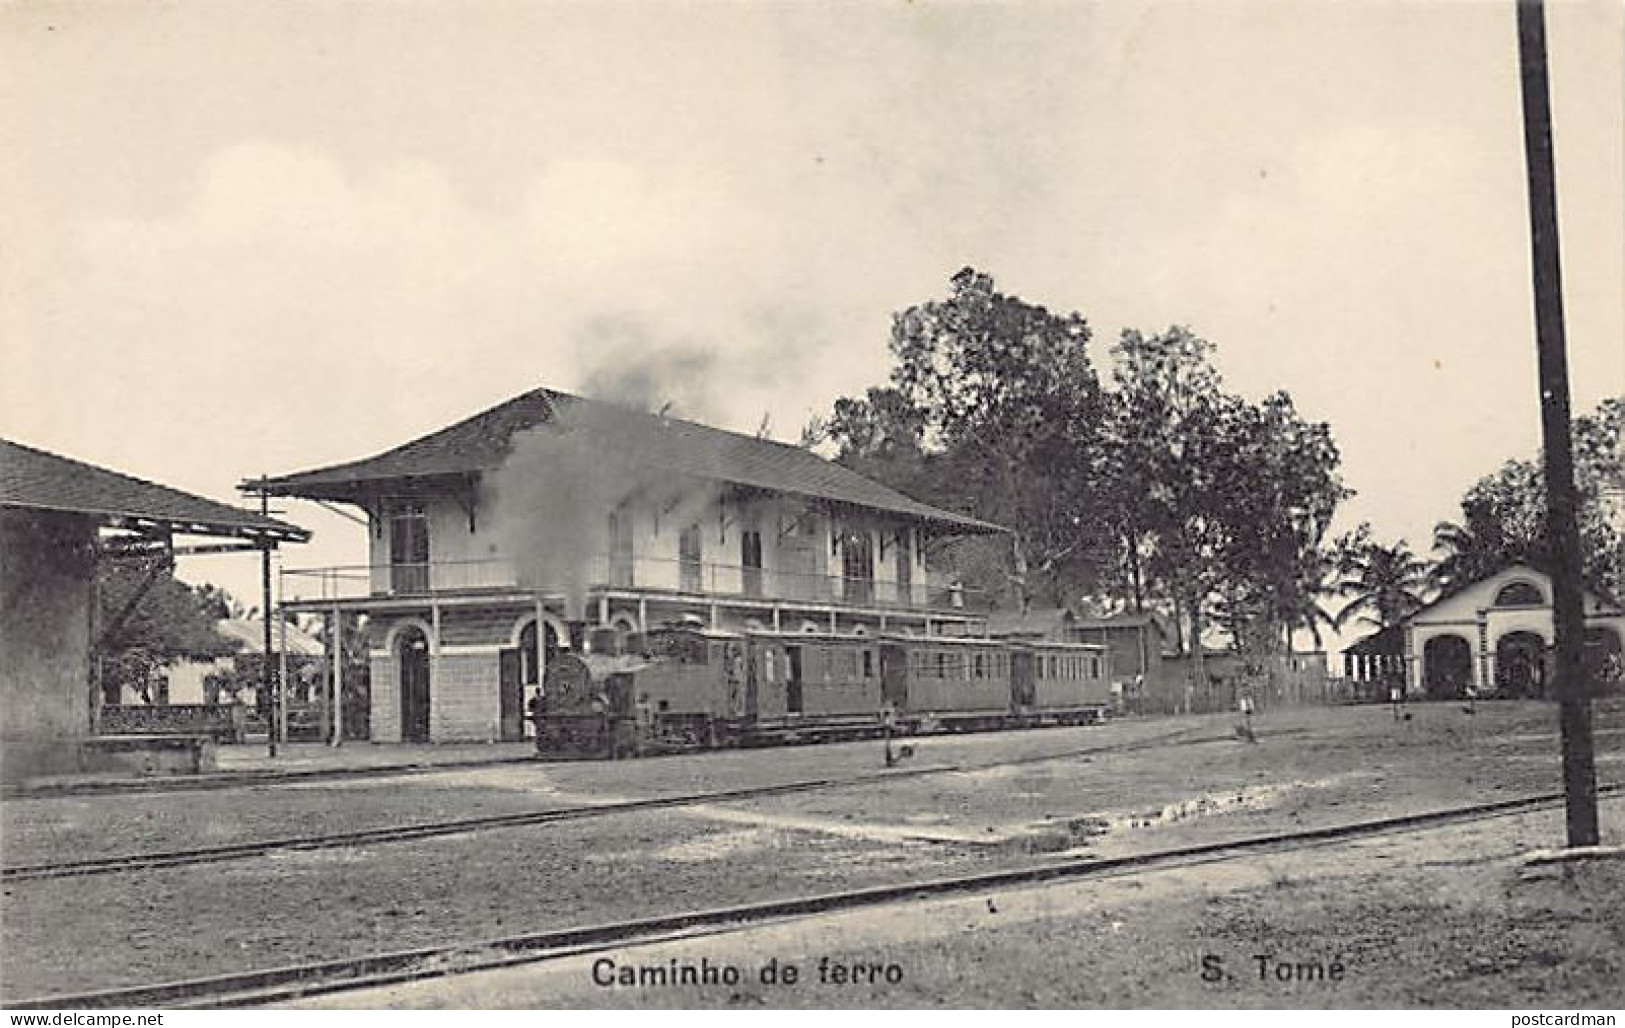 SAO TOME - The Railway Railroad Station - Publ. Governo. - Sao Tome And Principe